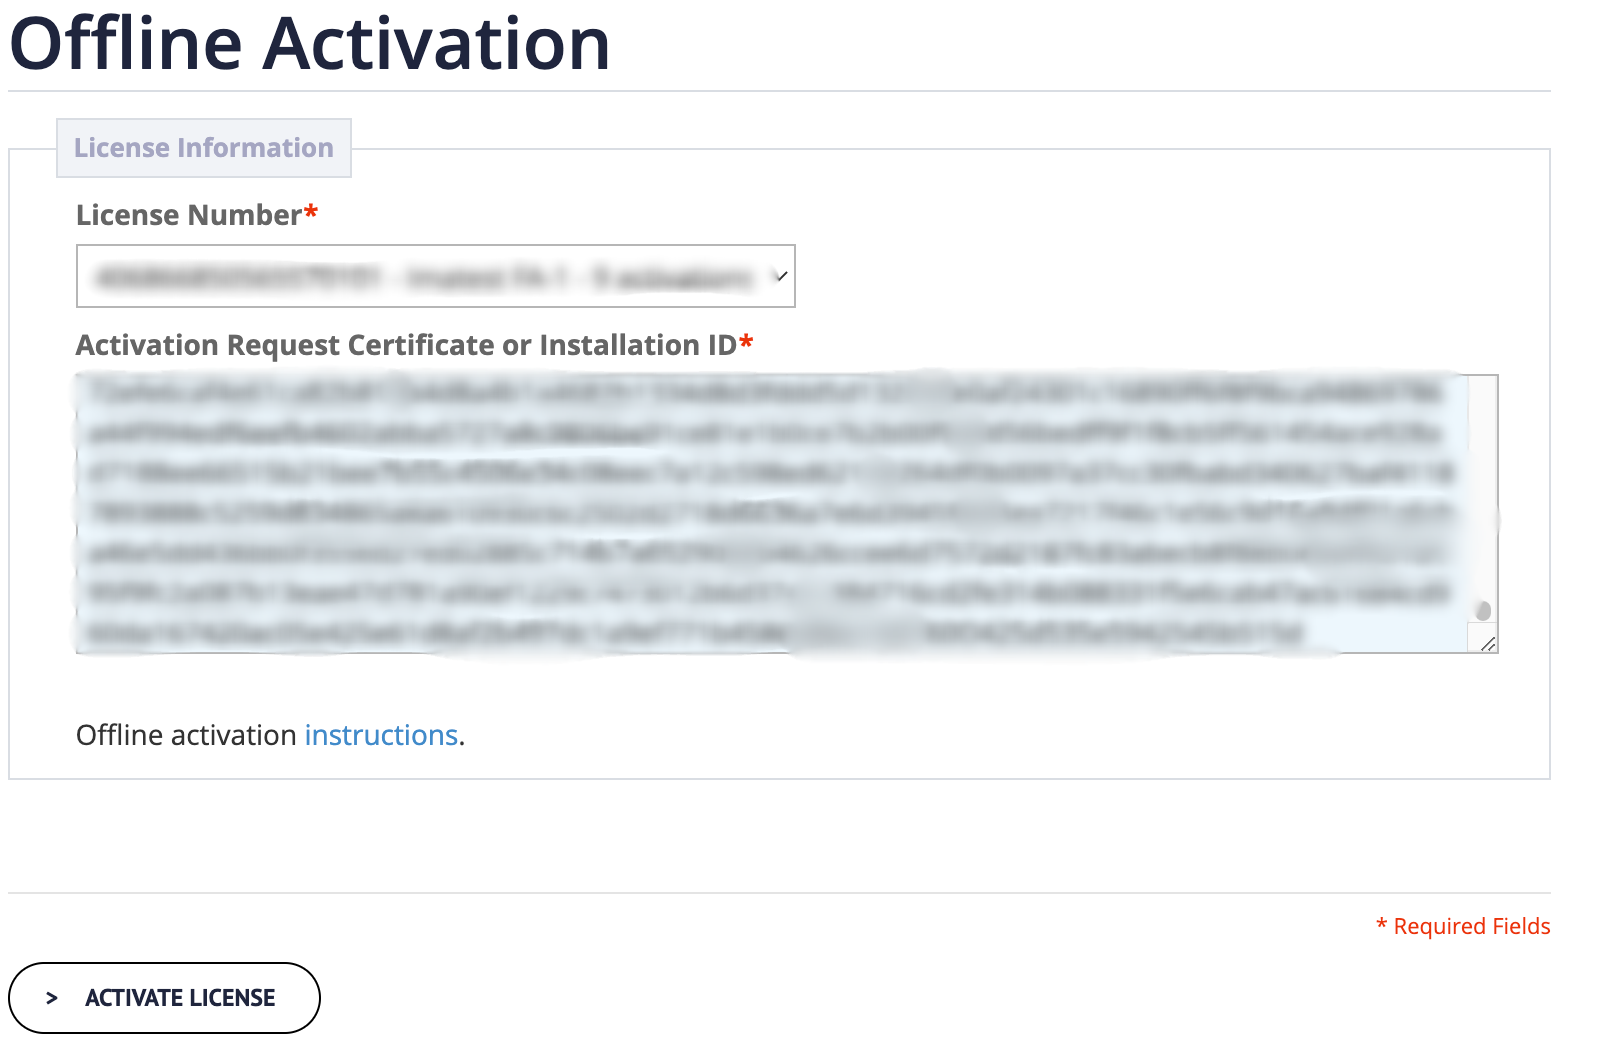 paste activation request certificate